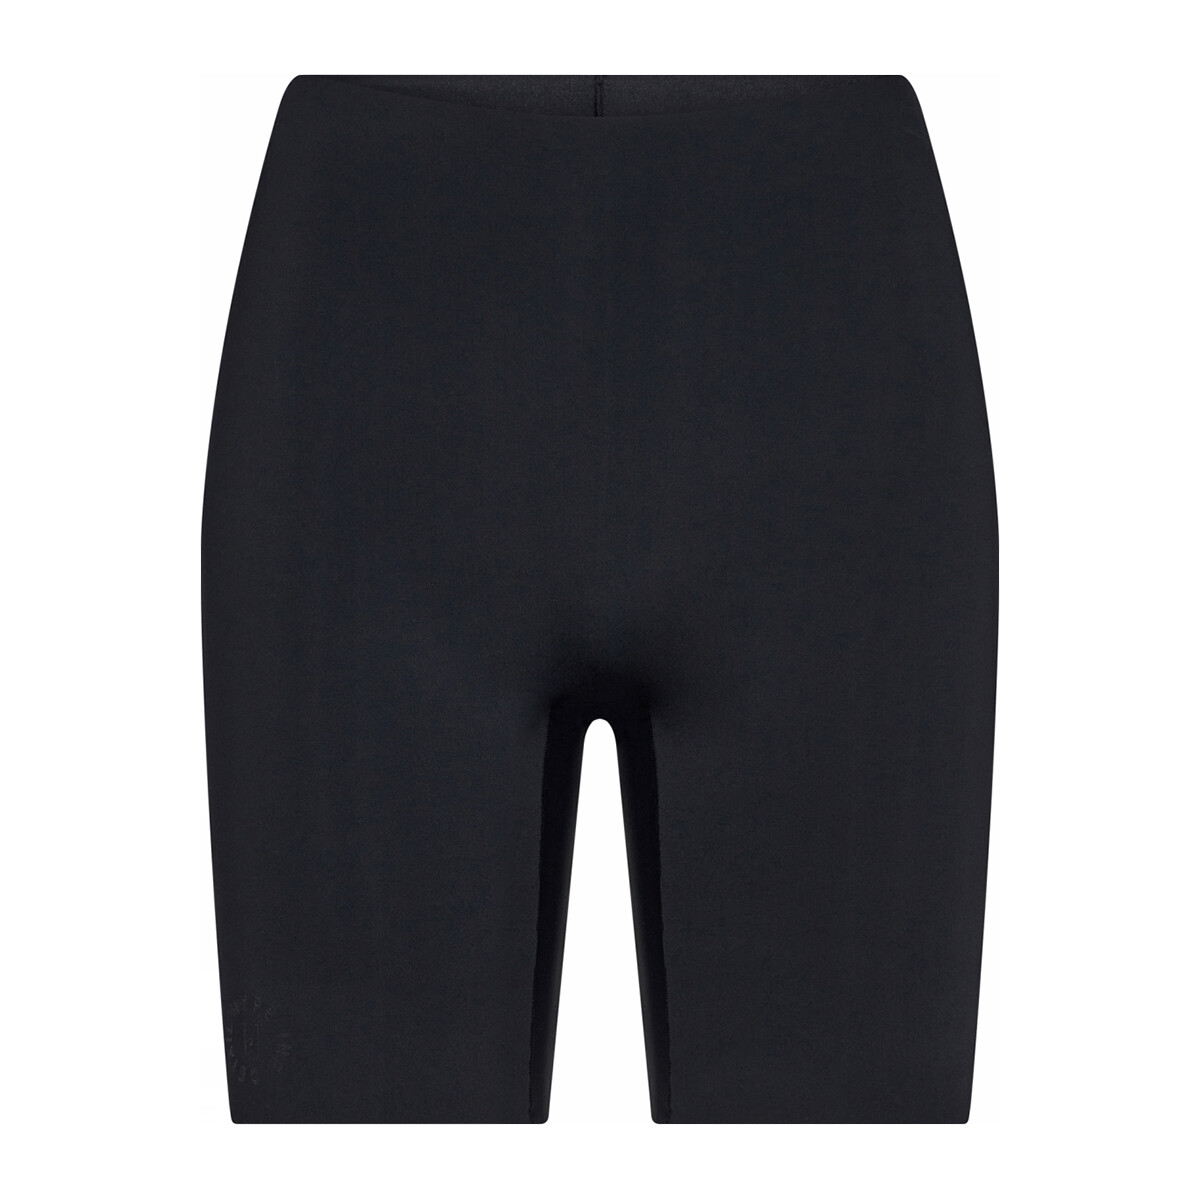 Se Hype The Detail Essentials Shorts, Farve: Sort, Størrelse: M, Dame hos Netlingeri.dk